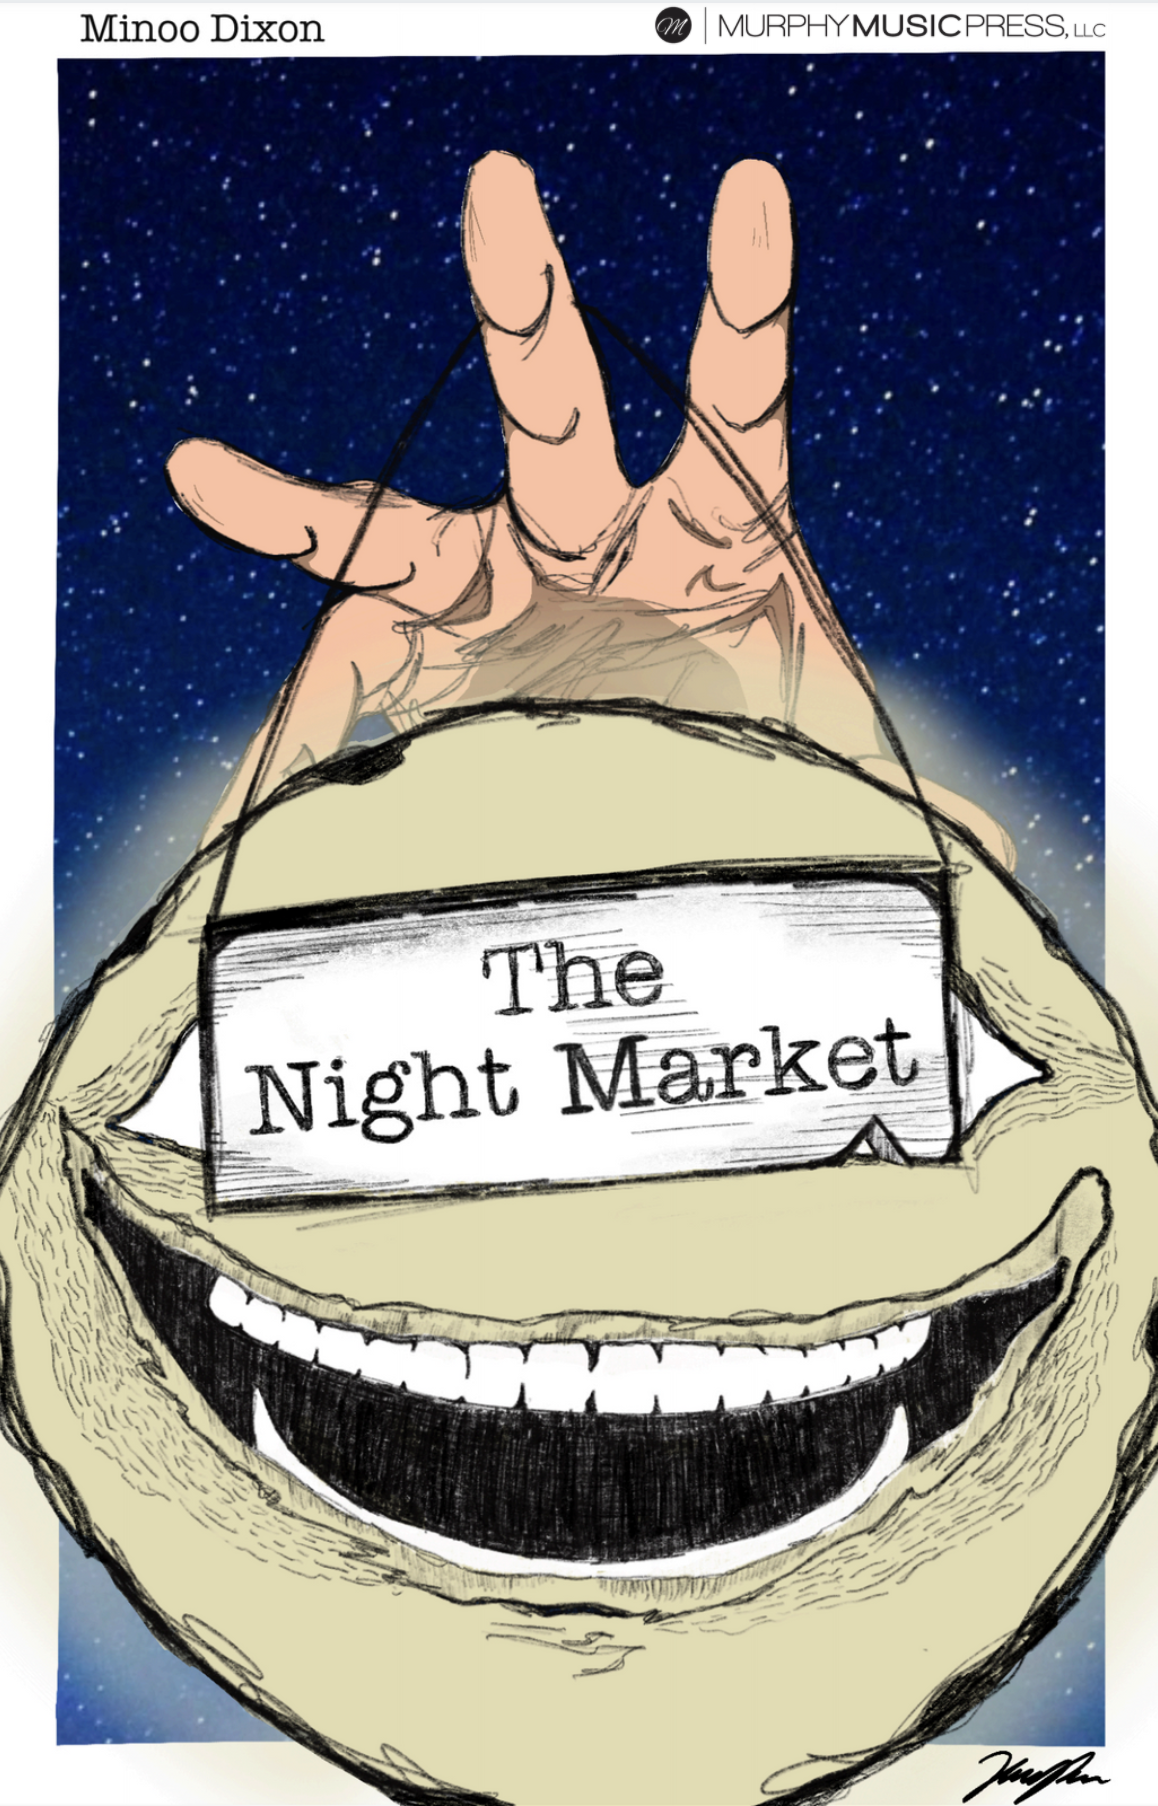 The Night Market by Minoo Dixon